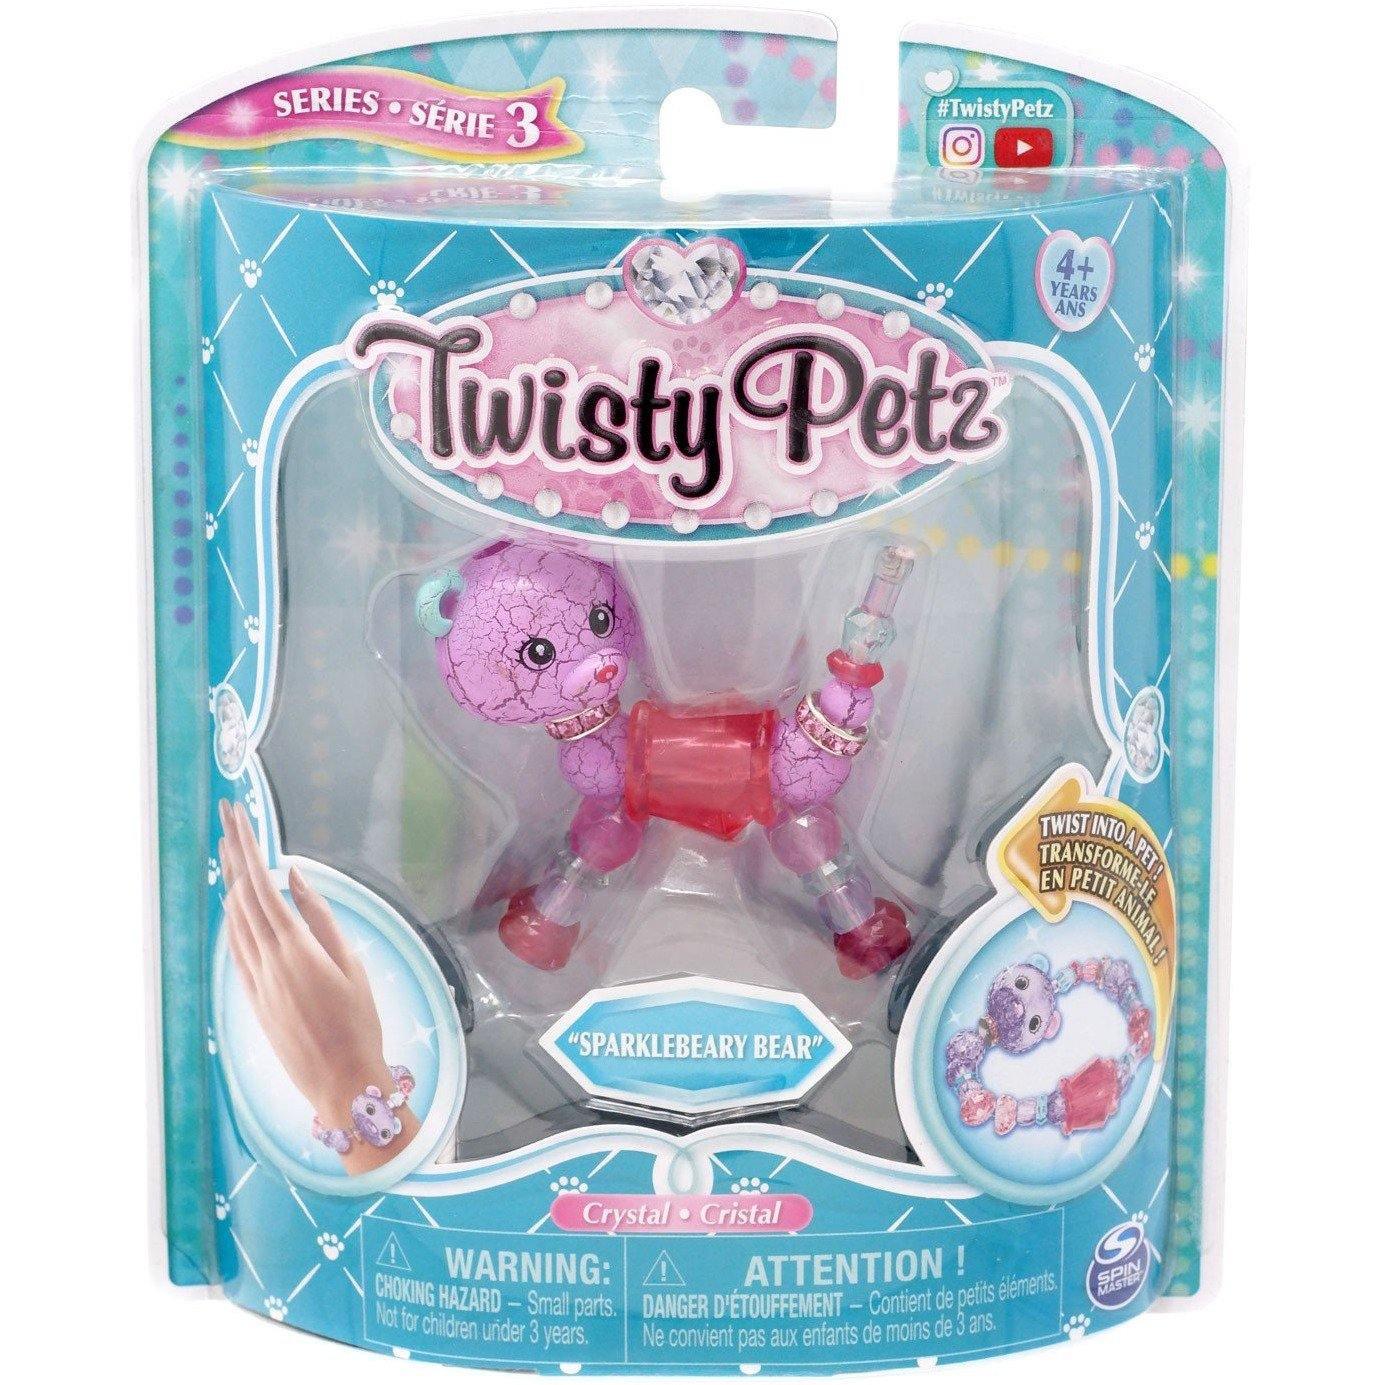 Twisty Petz Series 3 Transform Into A Bracelet - Sparklebeary Bear - BumbleToys - 5-7 Years, Arabic Triangle Trading, Girls, Make & Create, Twisty Petz